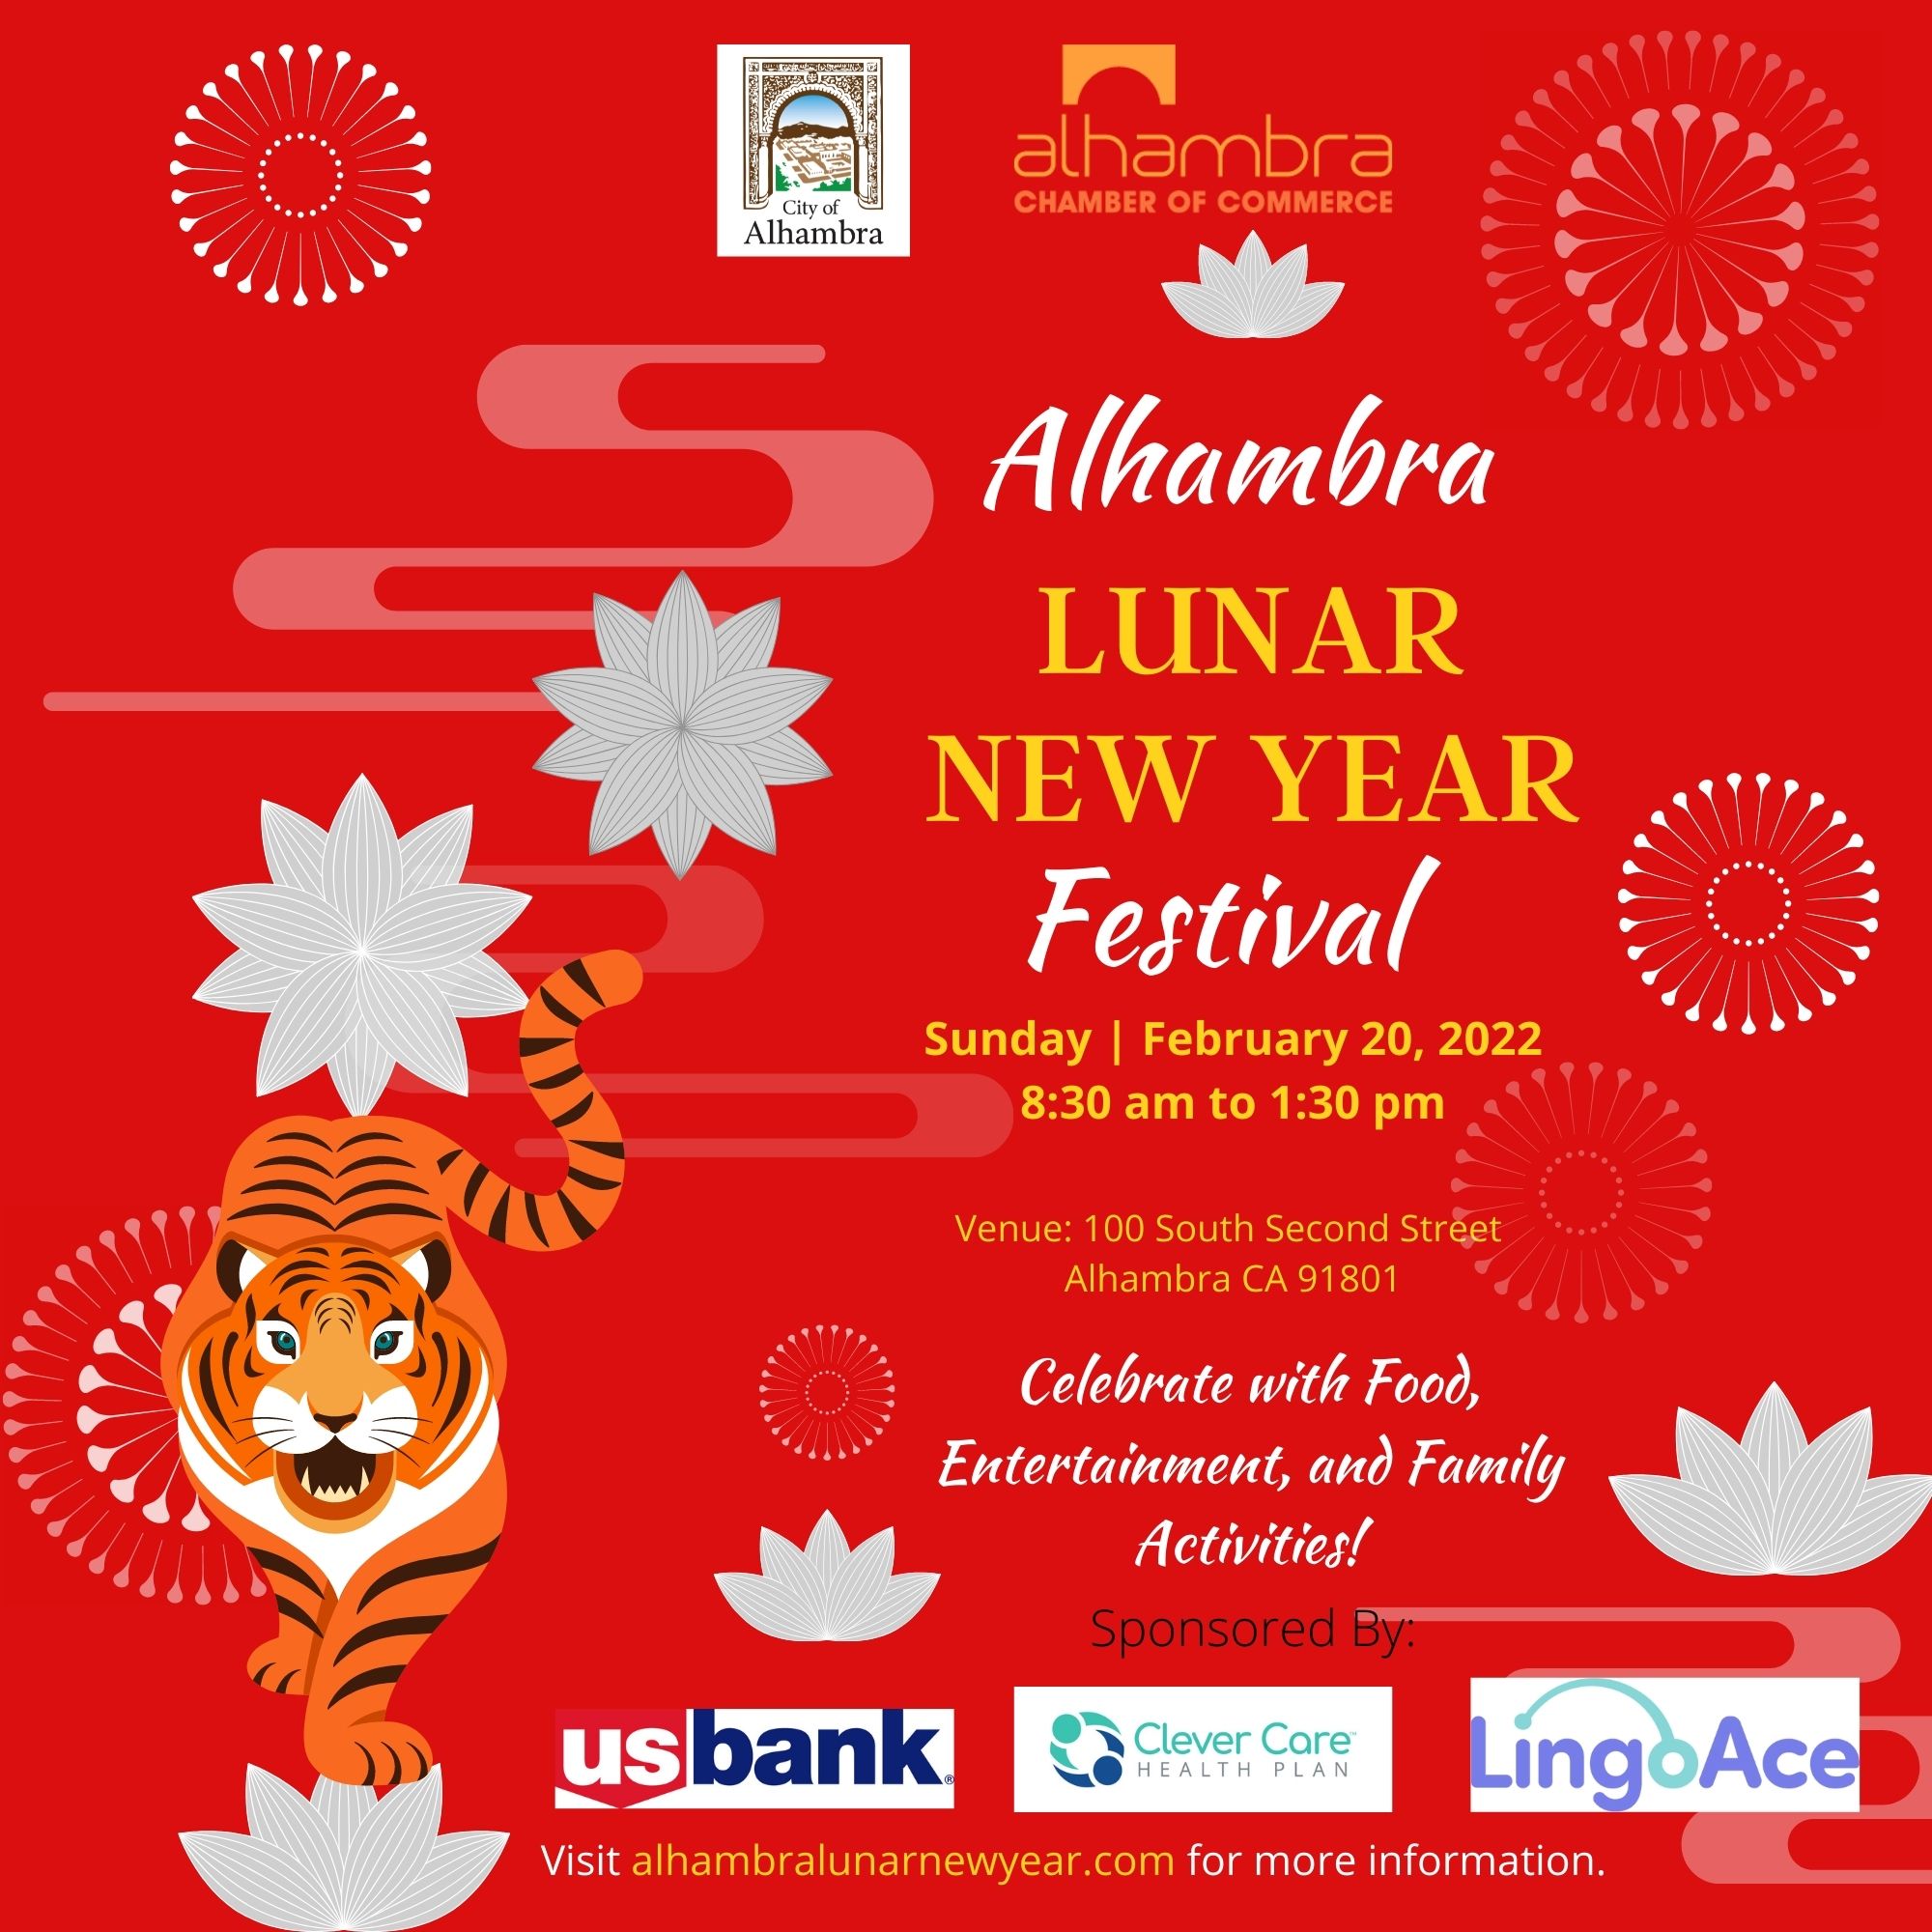 [Original size] Alhambra Lunar New Year Festival (297 × 297 mm)